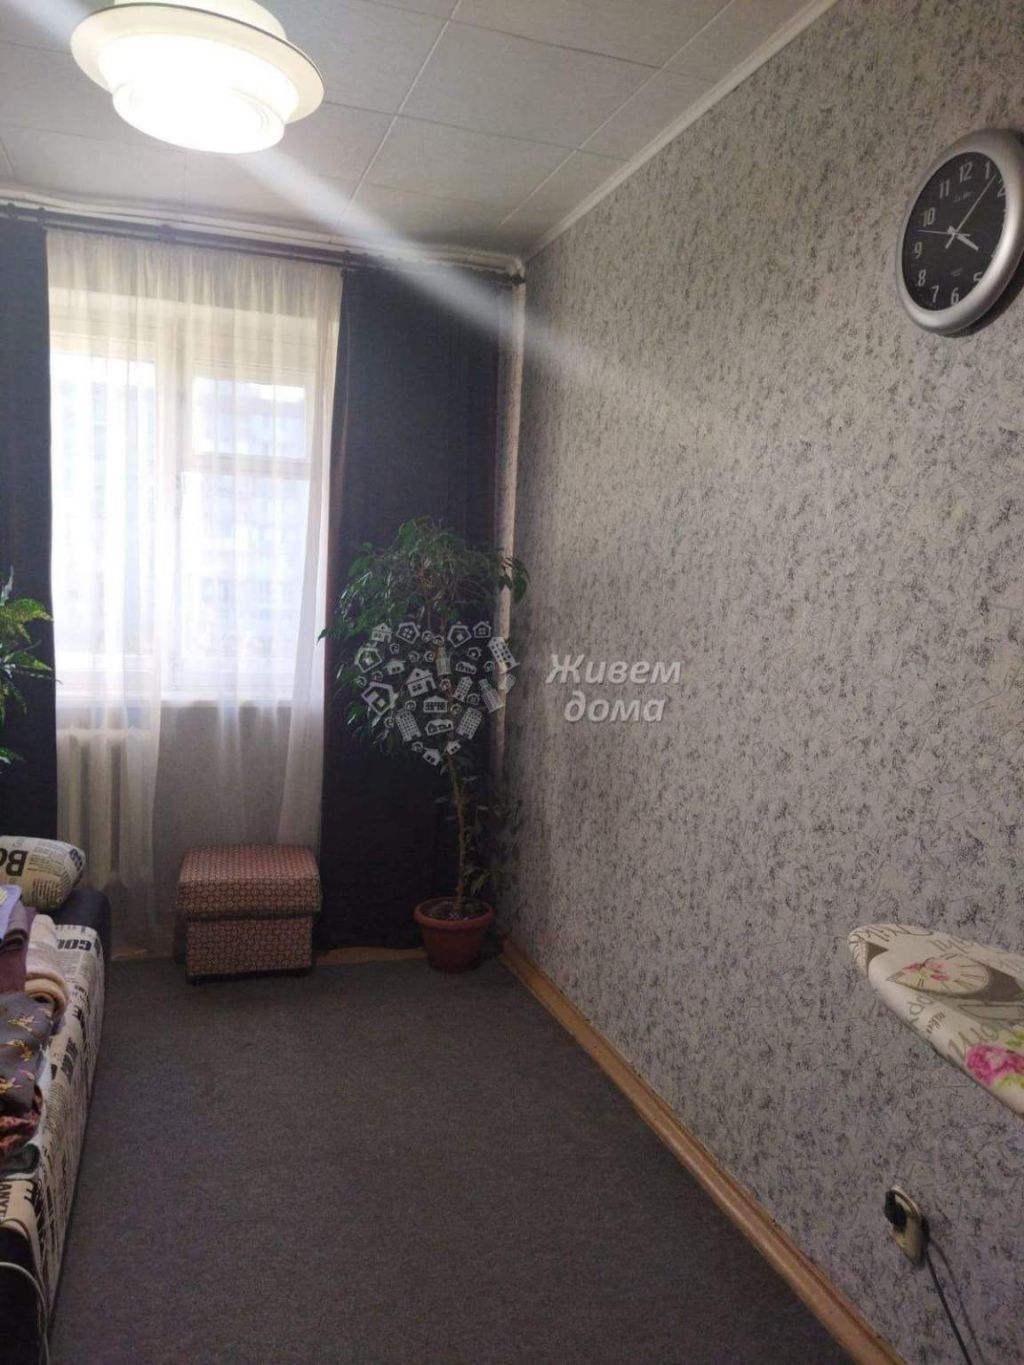 Продается 2-комн. квартира 44 кв.м. в Волгограде, цена: 2 950 000₽ объявление №275355 от 25.07.2022 | Продажа квартиры в Волгограде | Авеланго